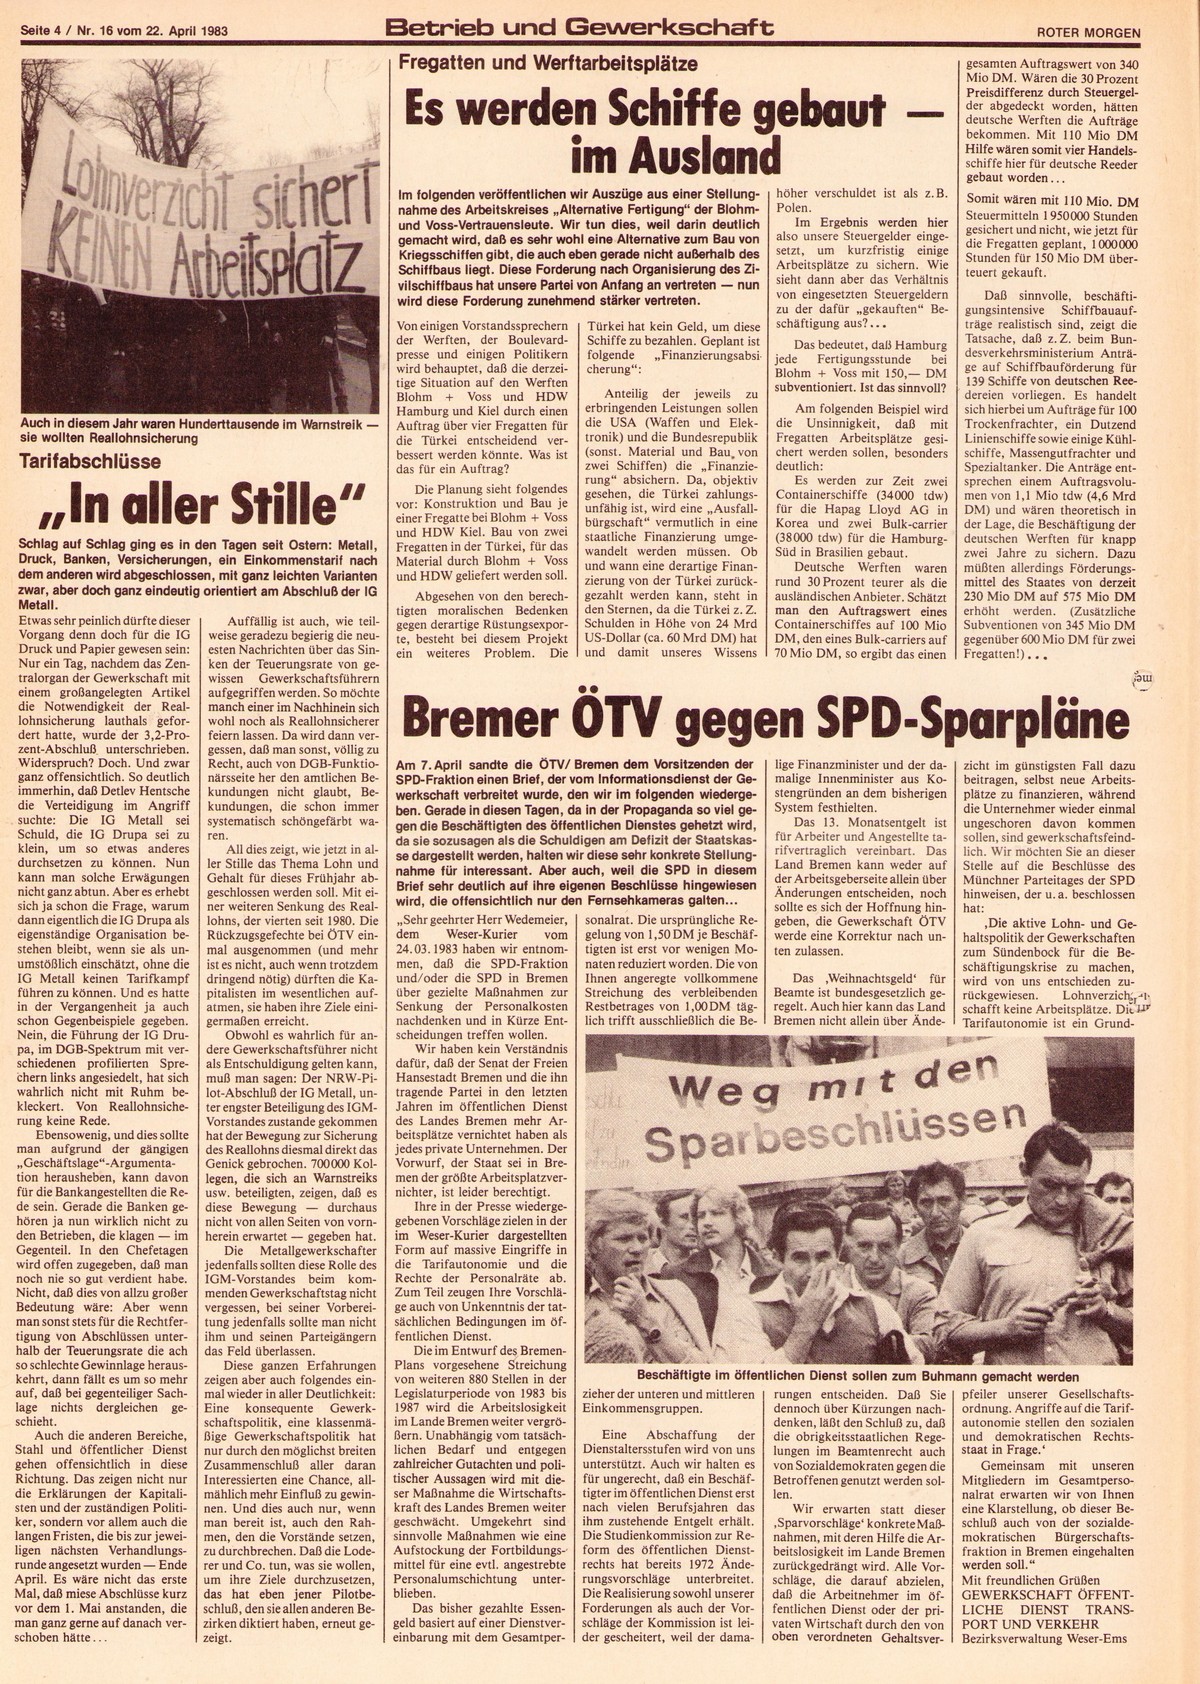 Roter Morgen, 17. Jg., 22. April 1983, Nr. 16, Seite 4